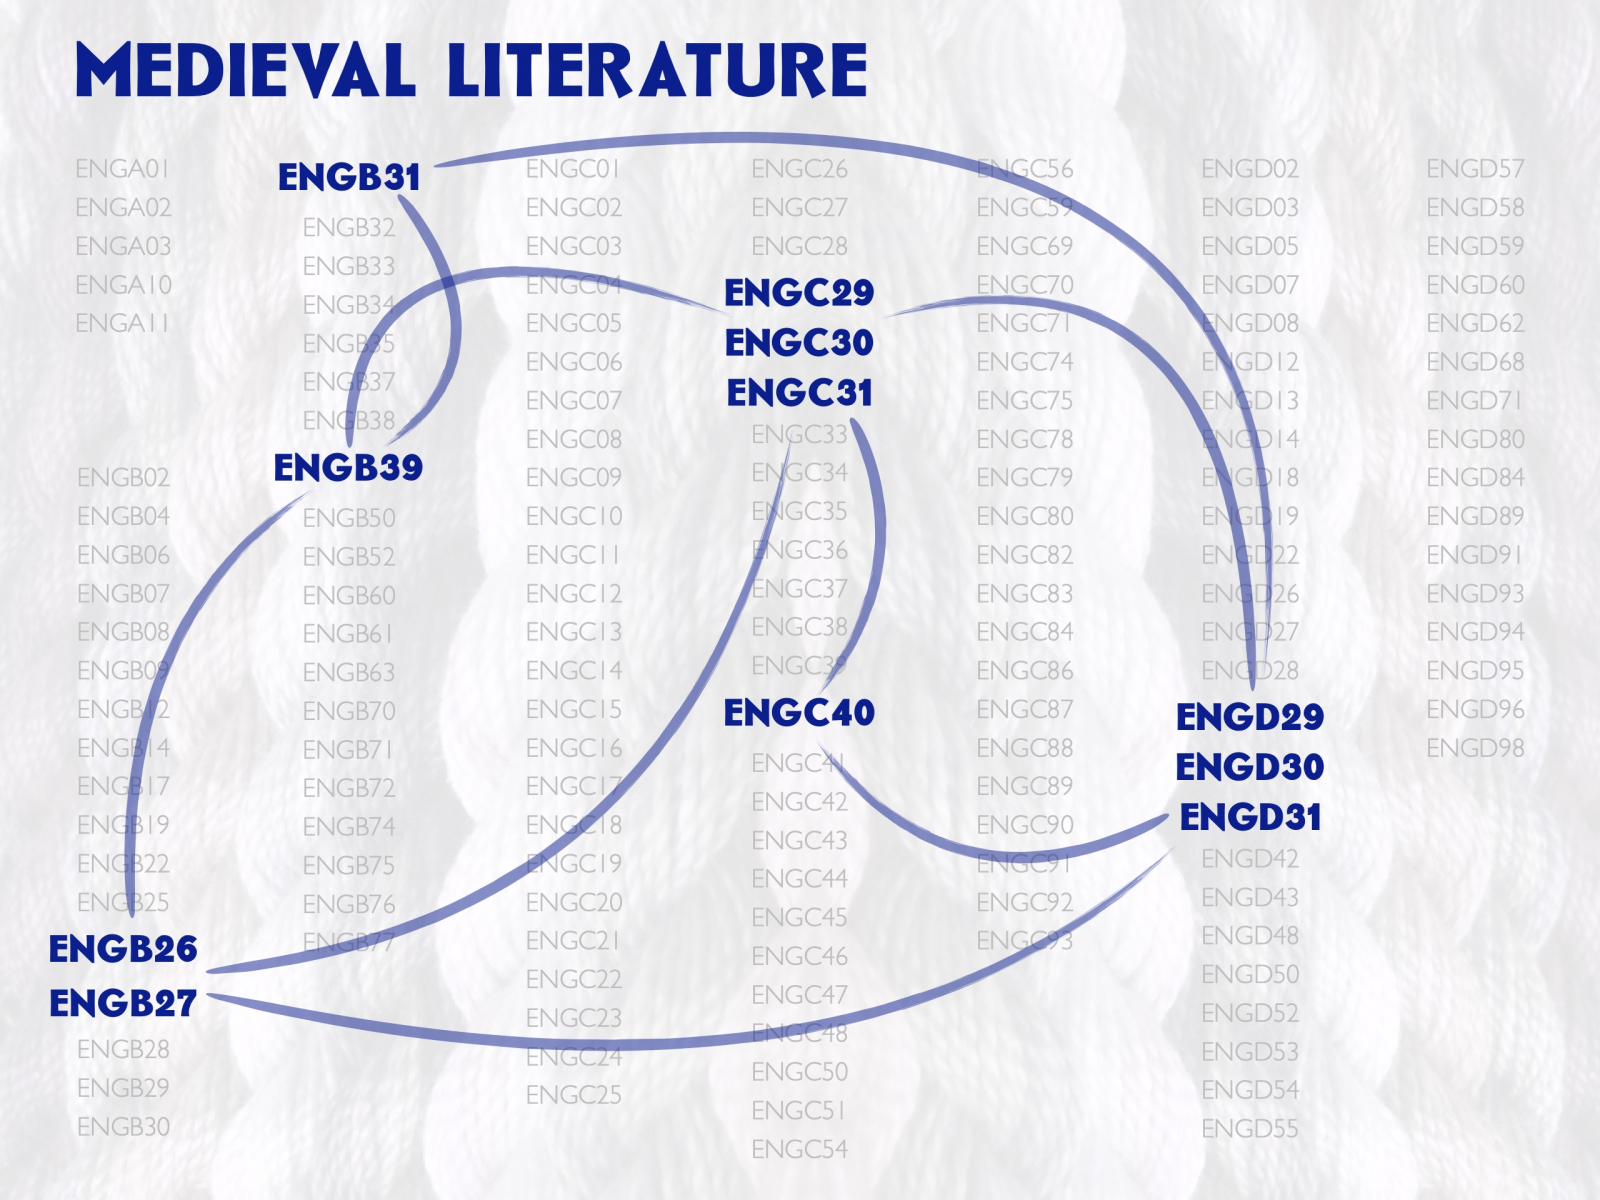 Medieval Literature road map